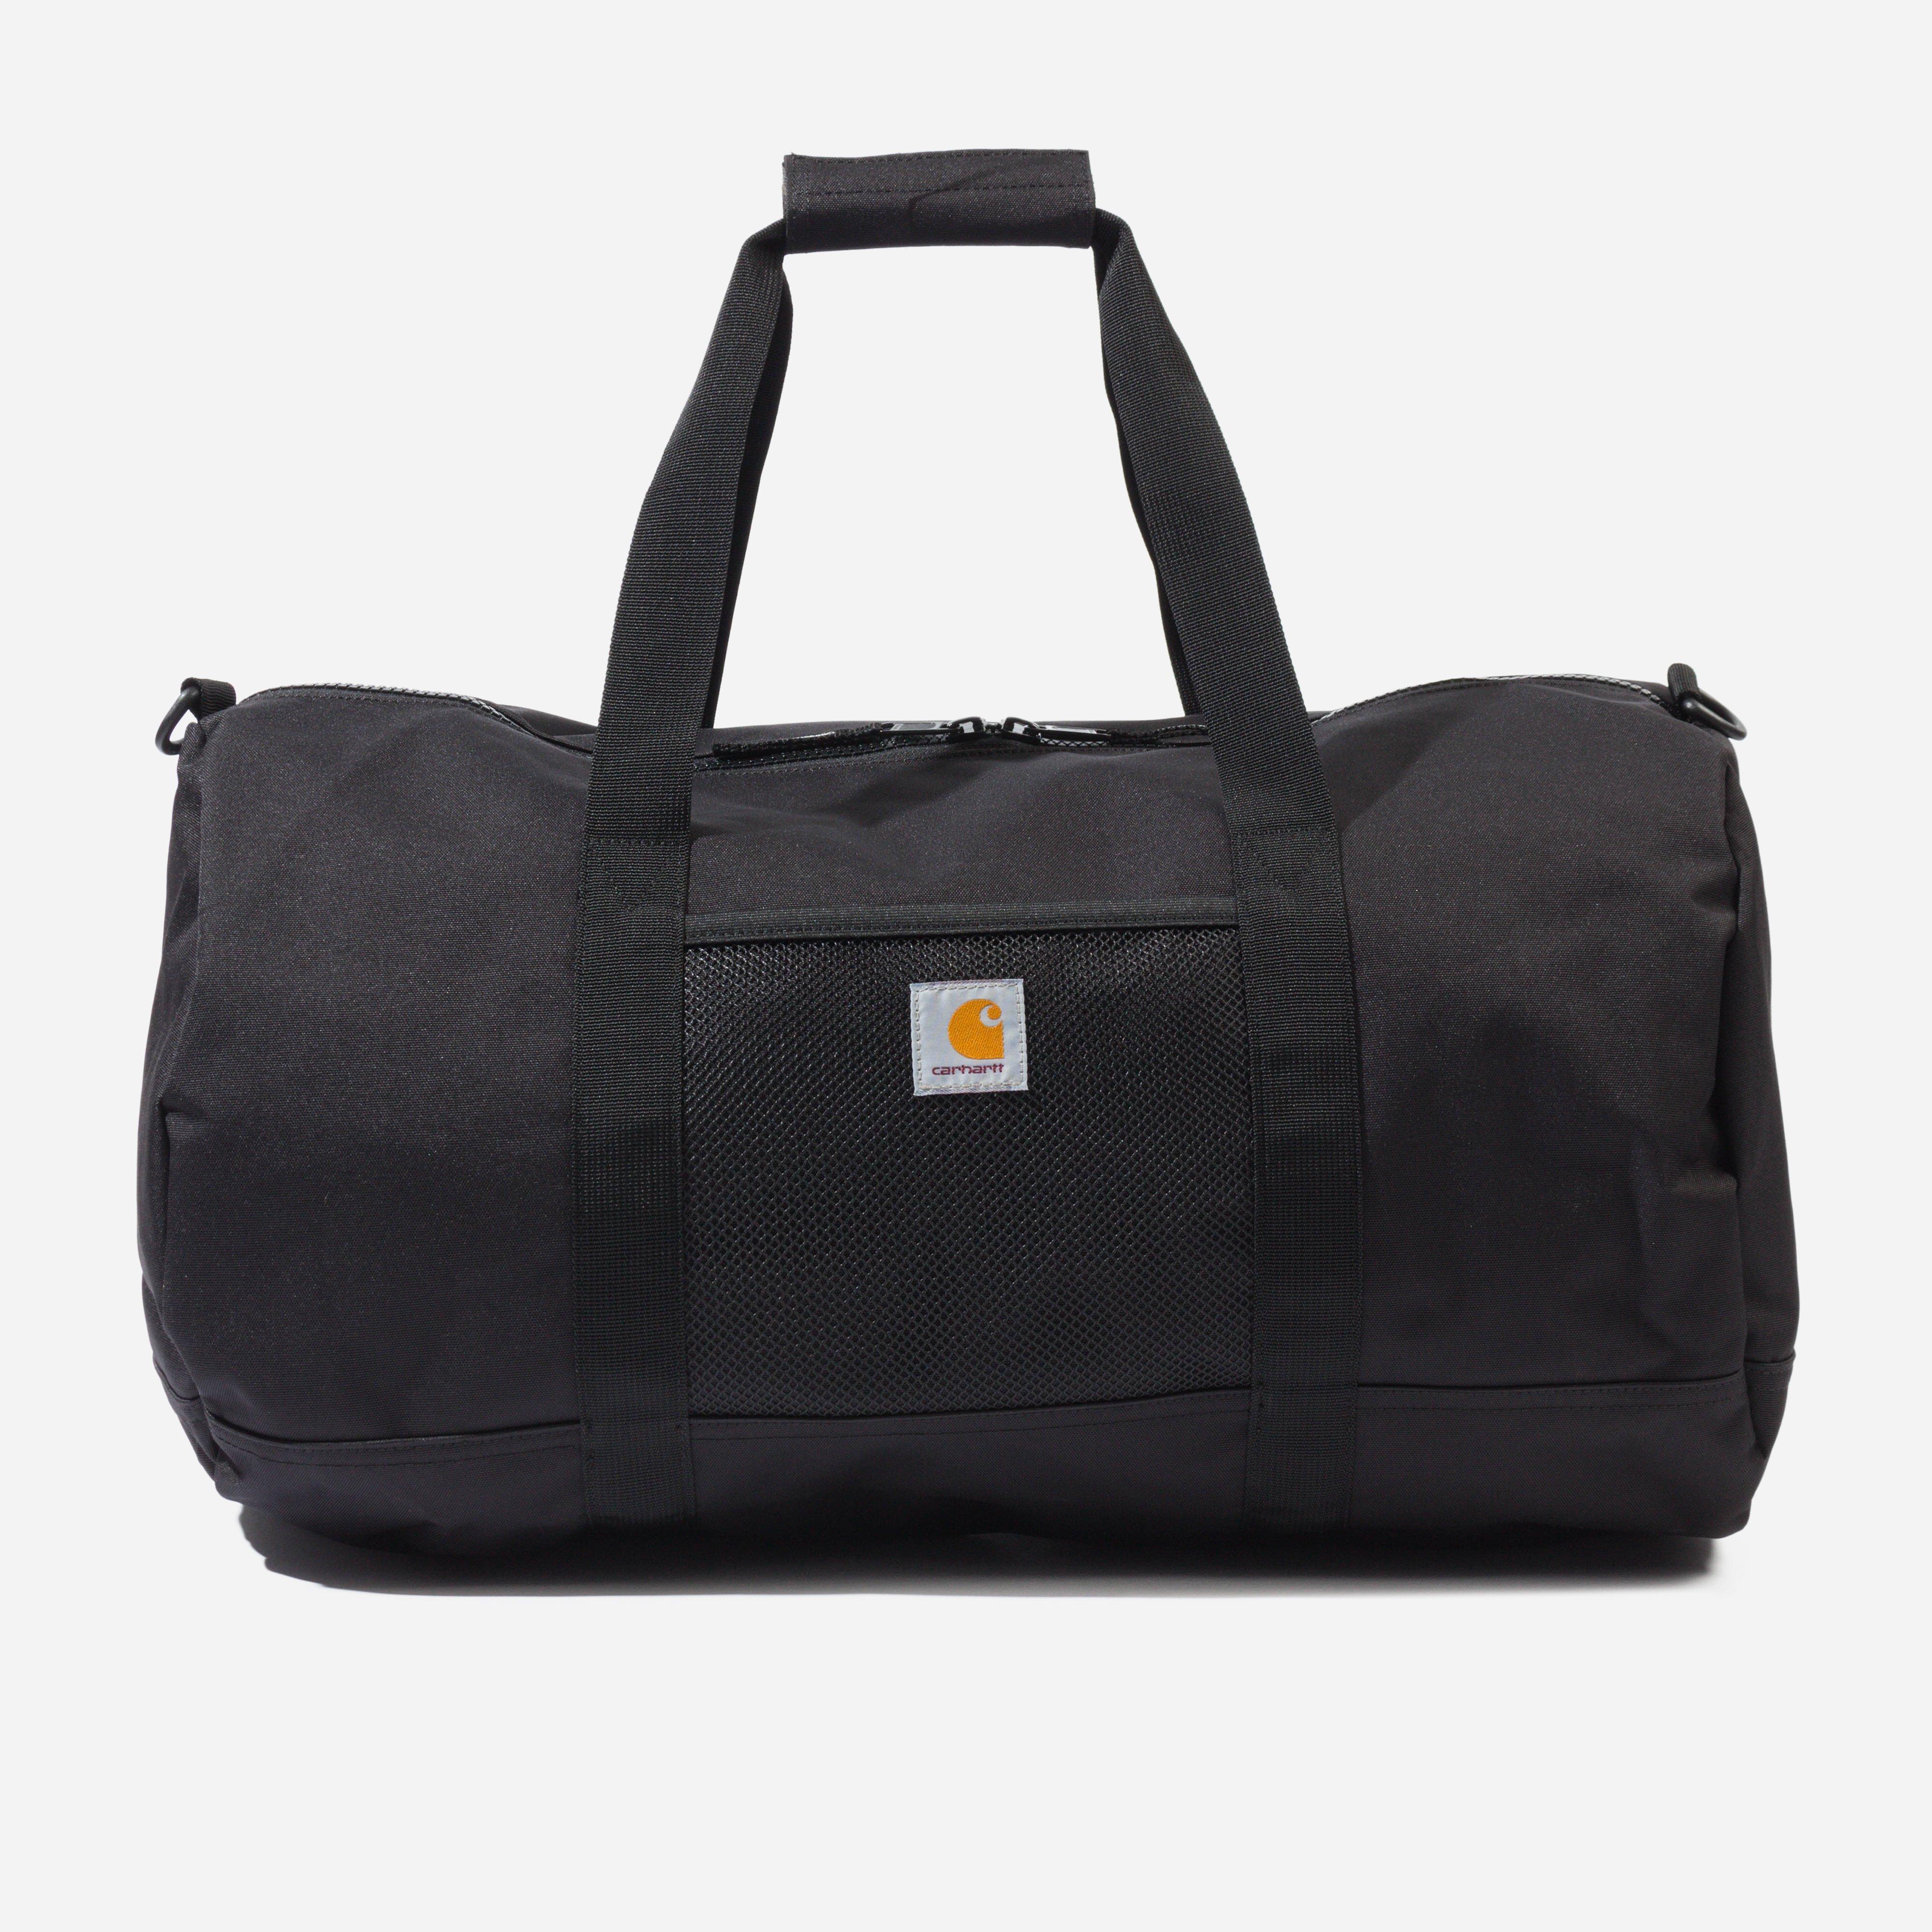 Carhartt WIP Wright Duffle Bag in Black for Men - Lyst